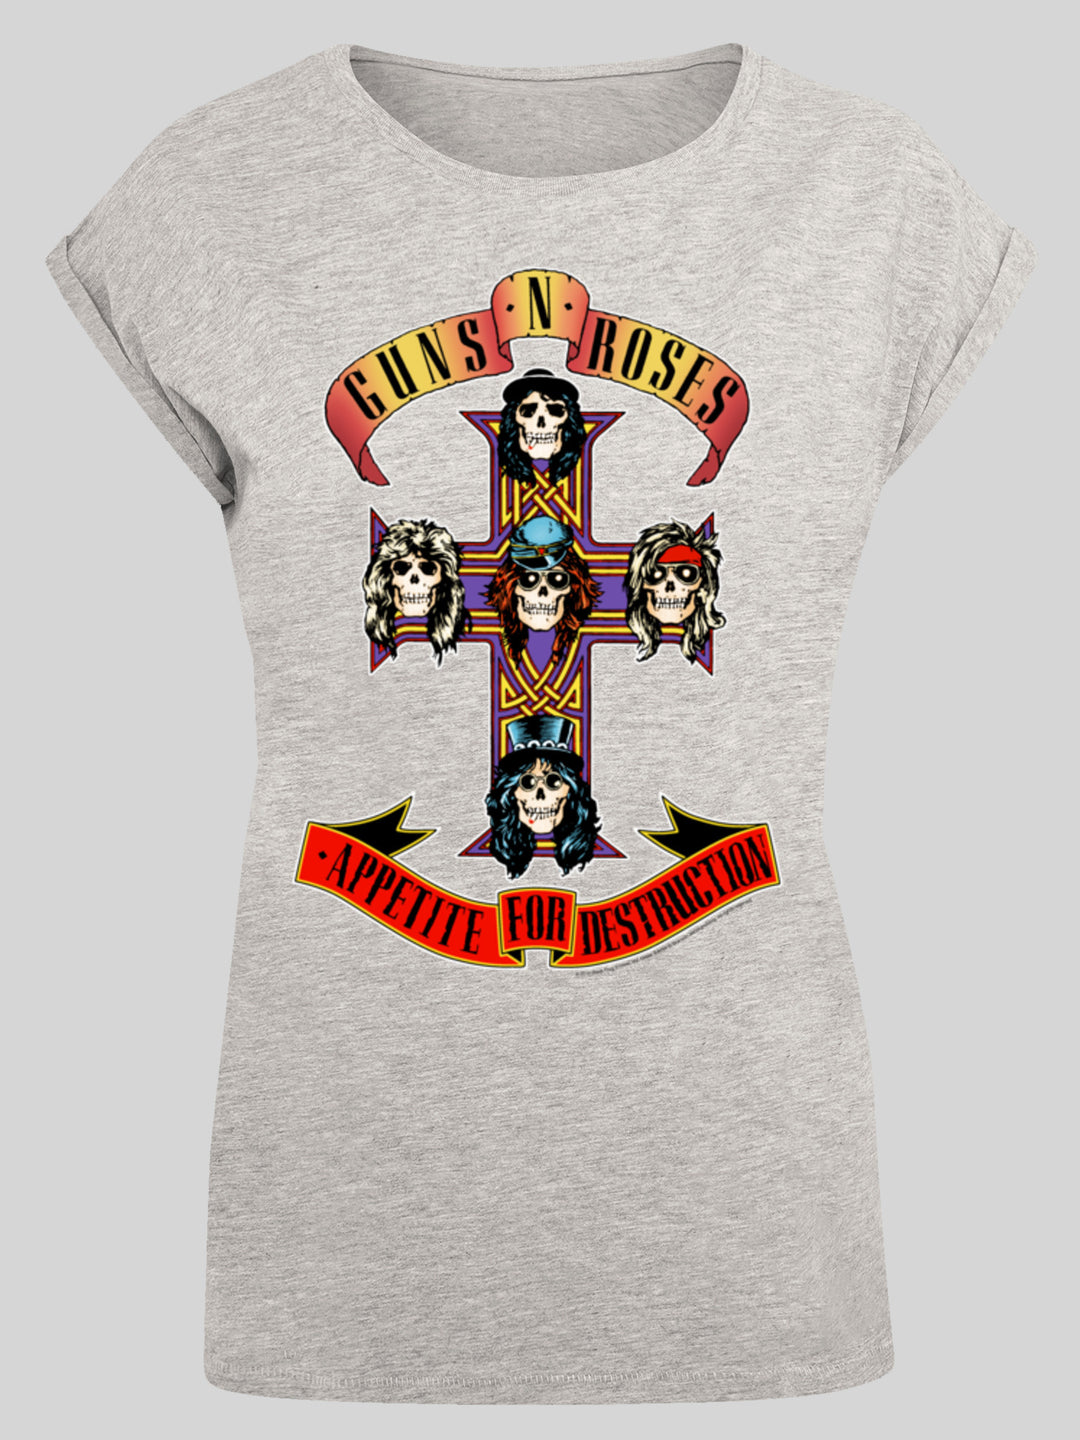 Guns 'n' Roses T-Shirt | Appetite For Destruction | Premium Short Sleeve Ladies Tee